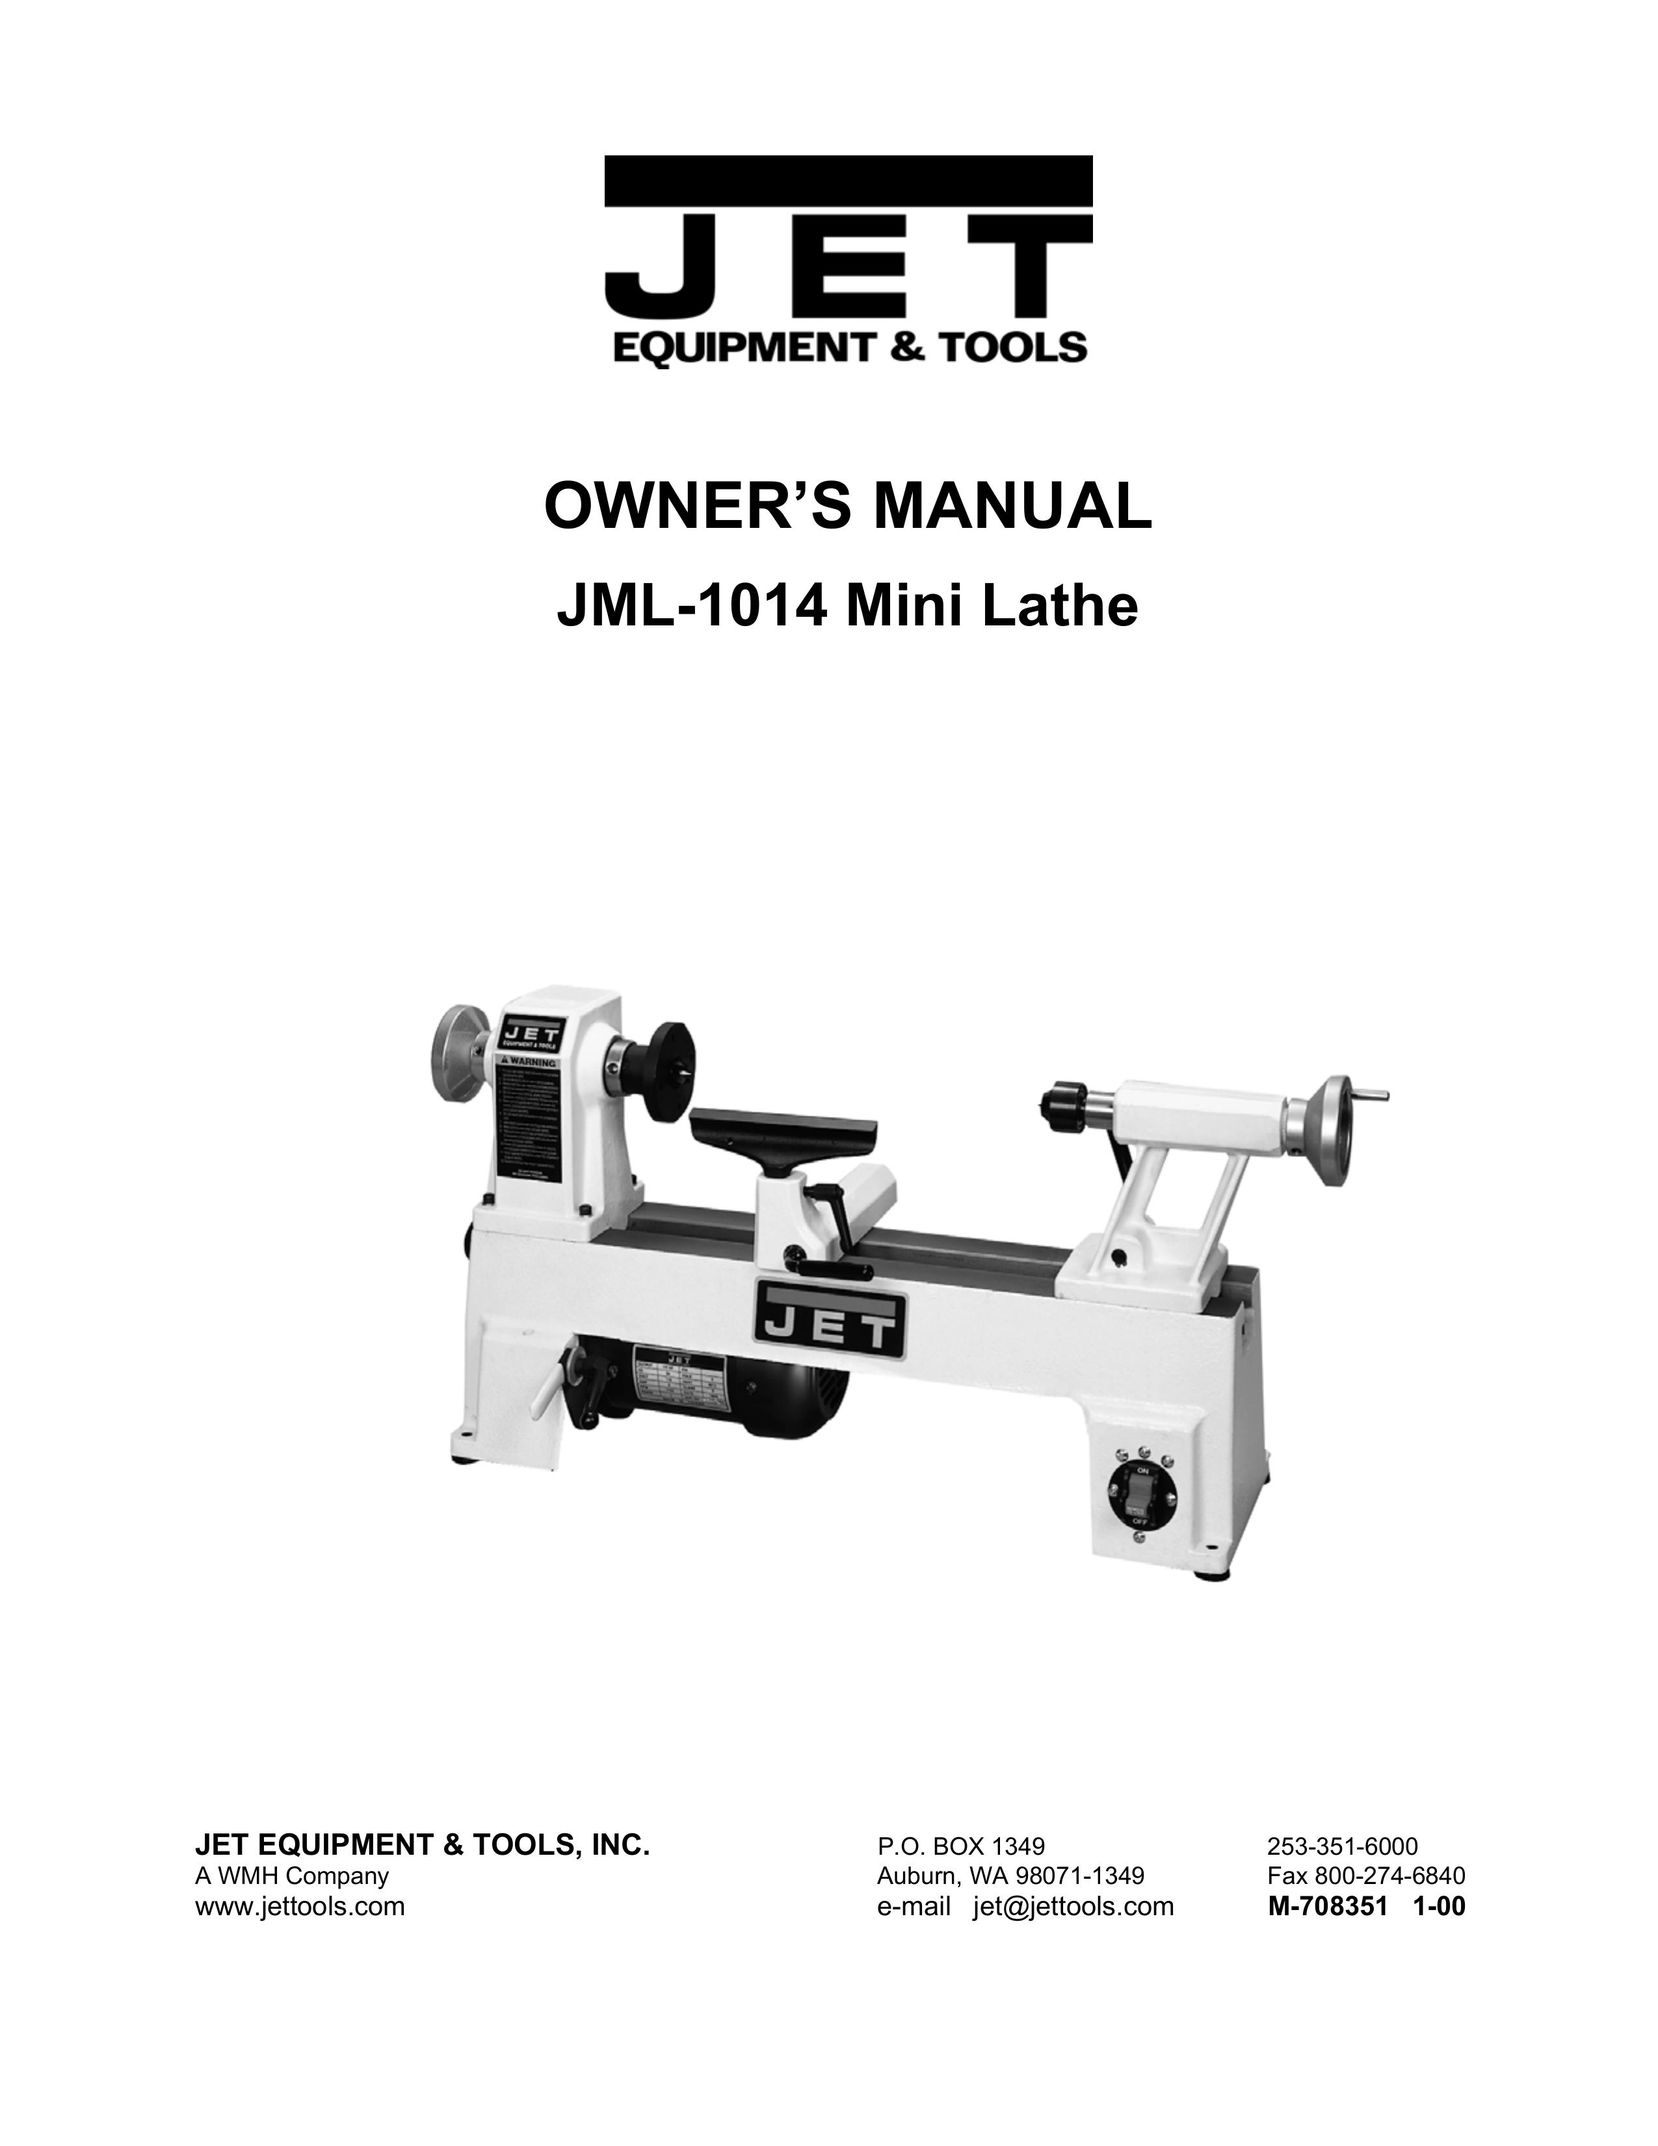 Jet Tools JML-1014 Lathe User Manual